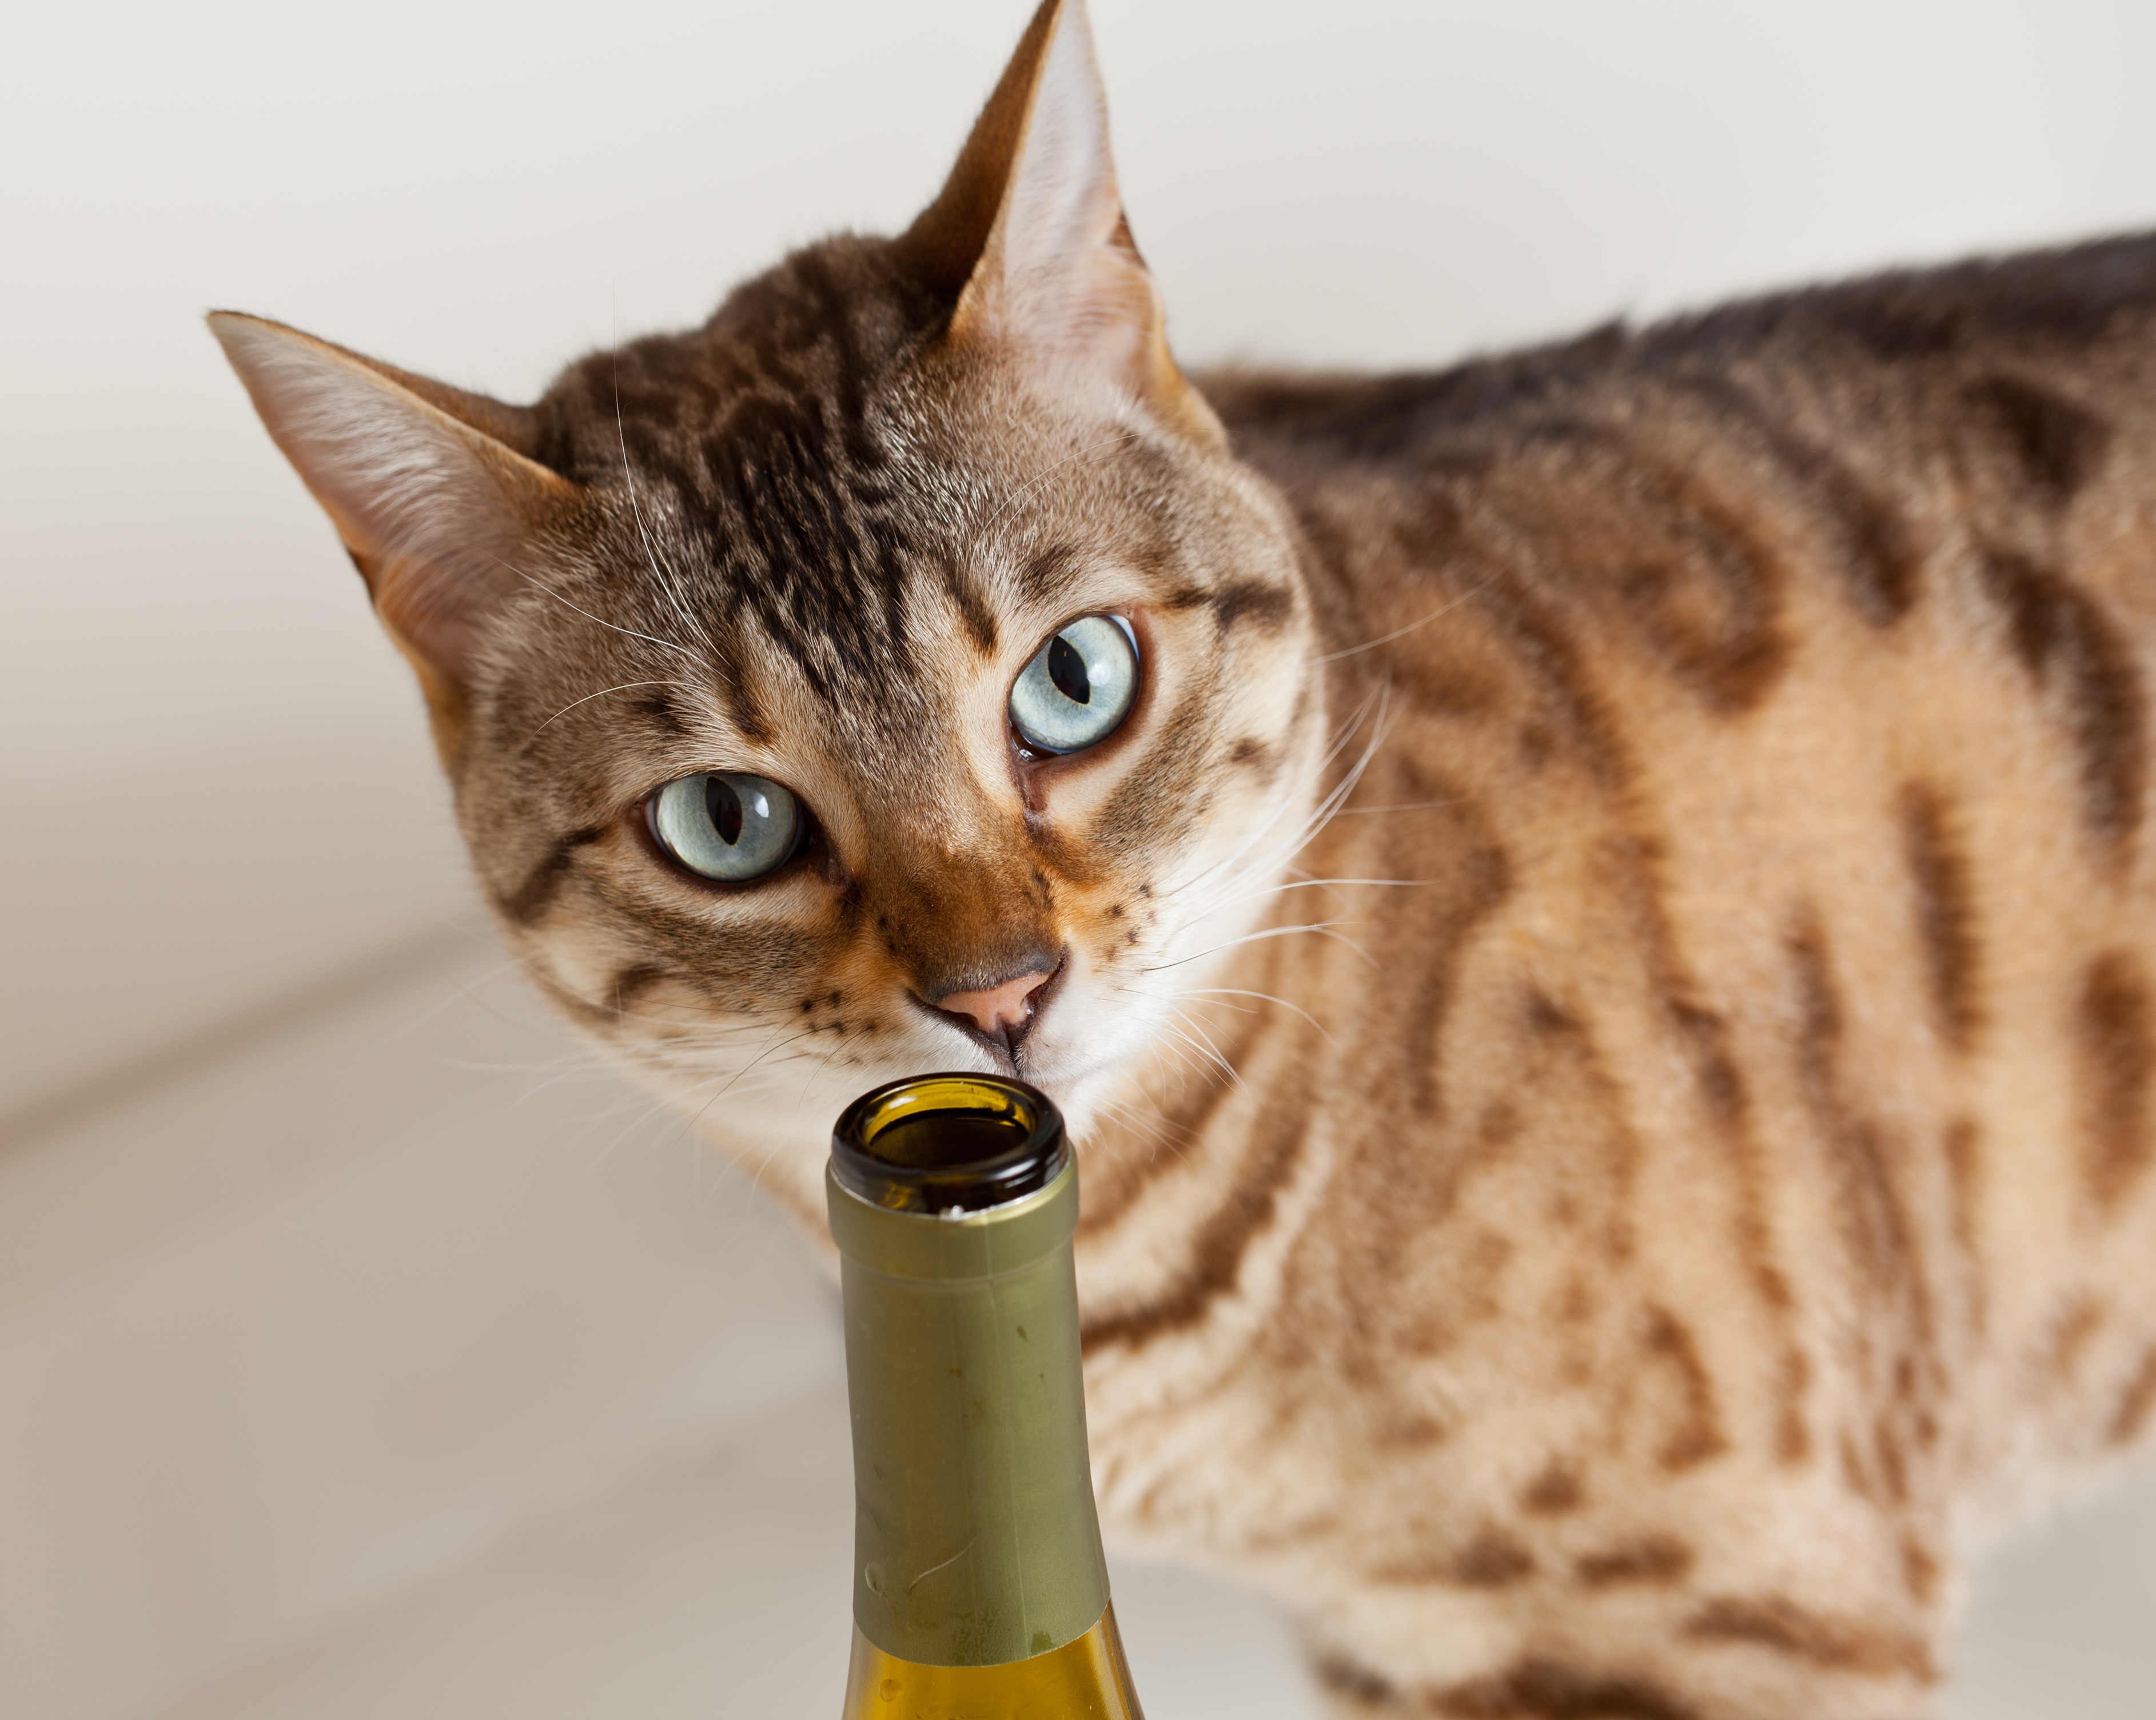 Cut kitten smelling the top of an opened wine bottle